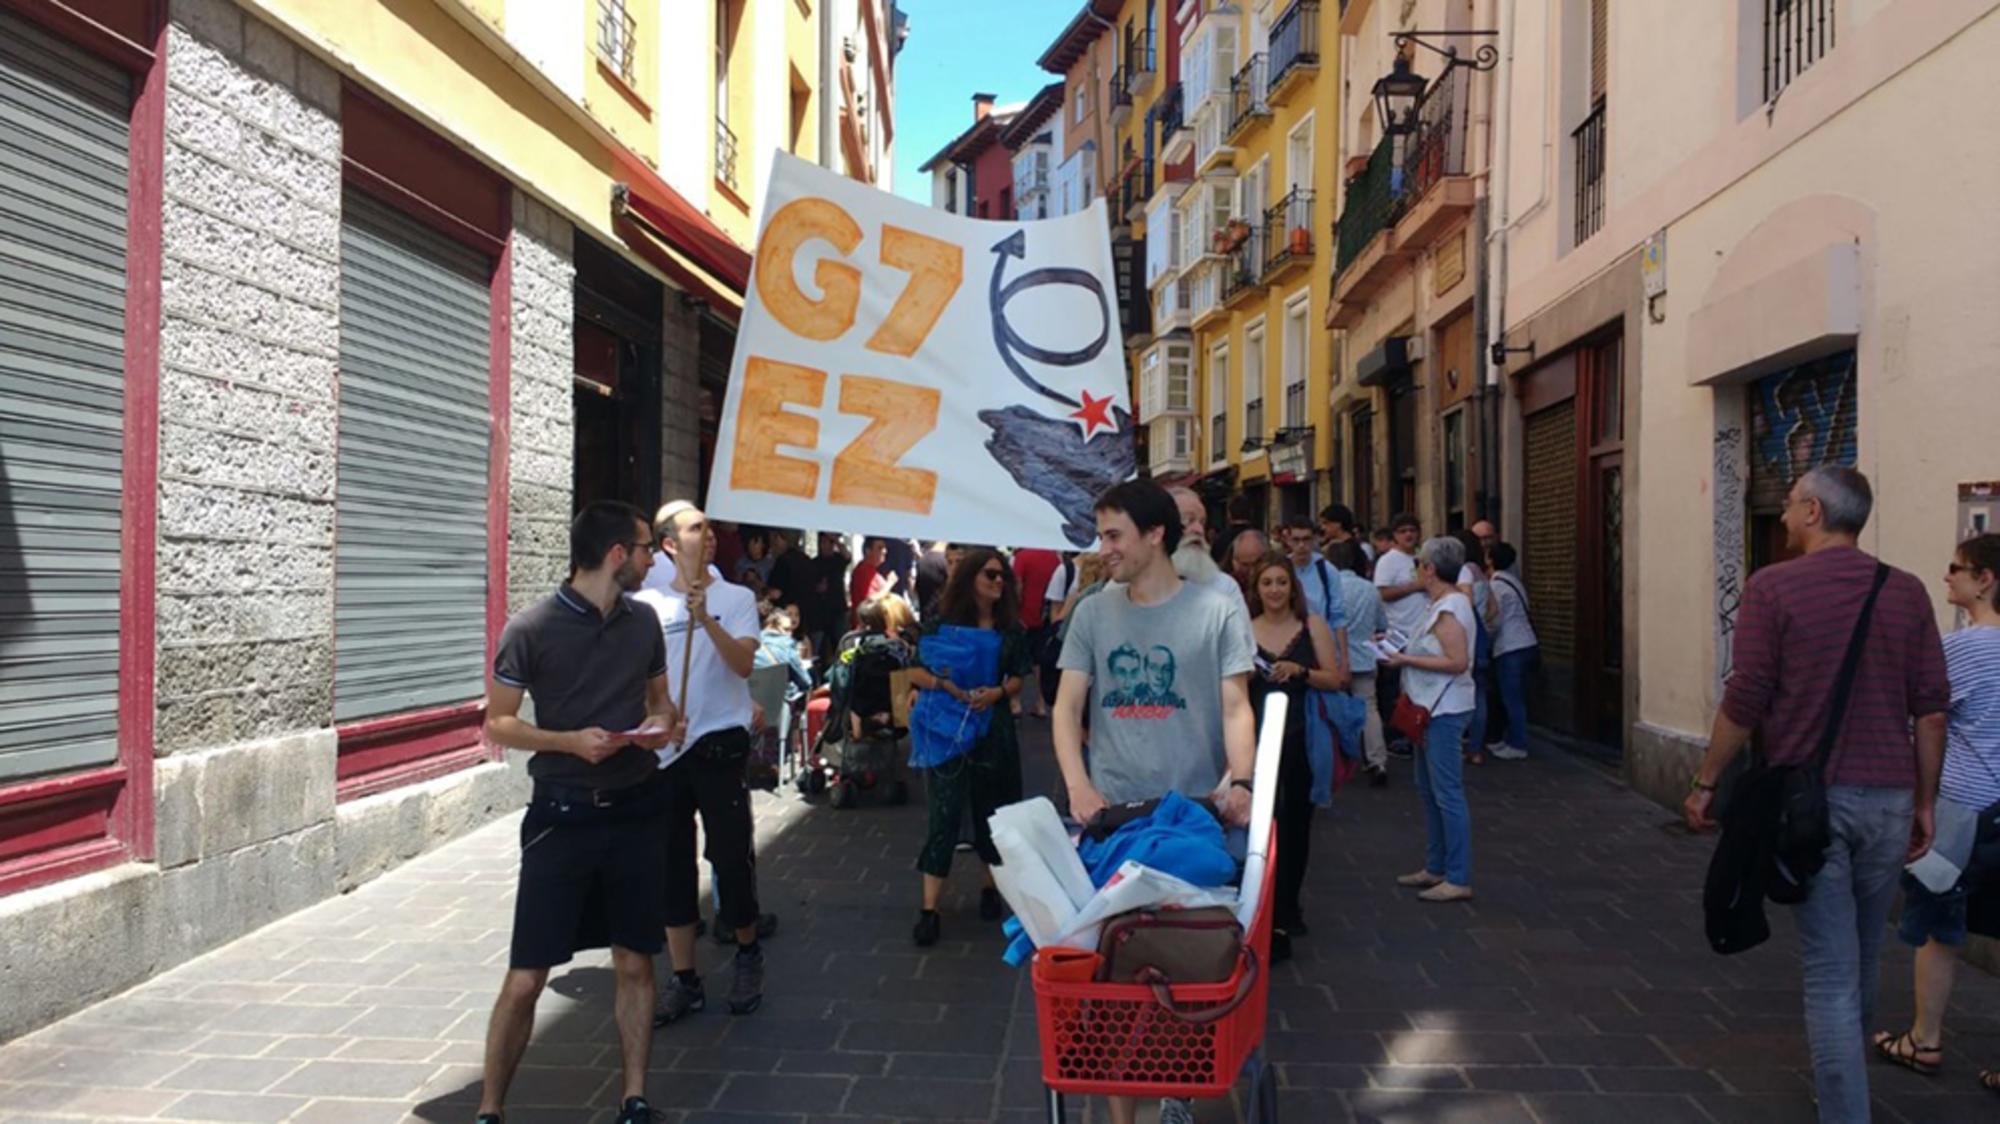 Protesta contra G7